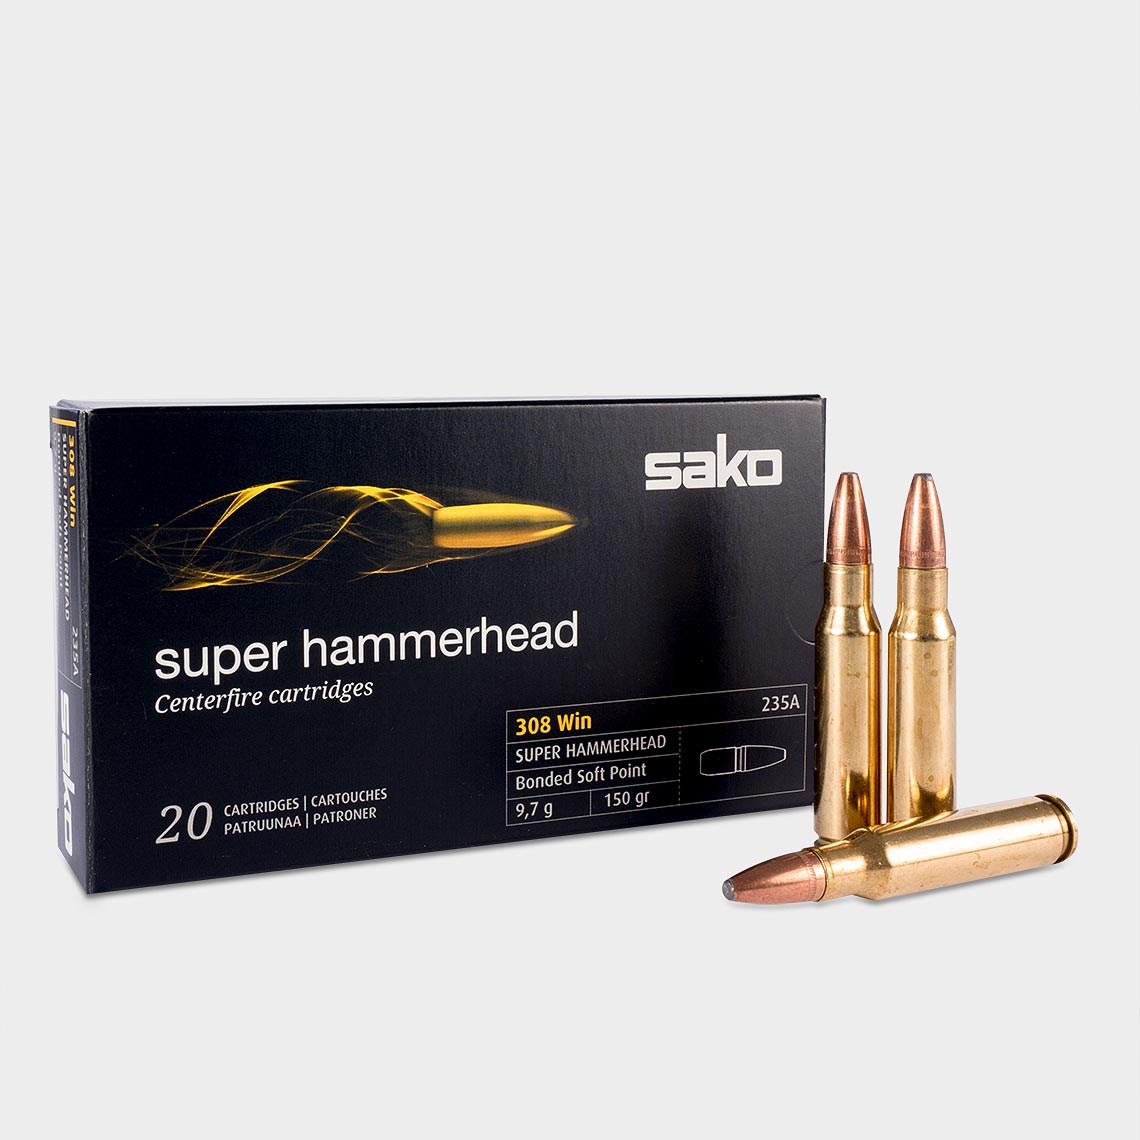 Super Hammerhead - Trustach Shooting Supplies